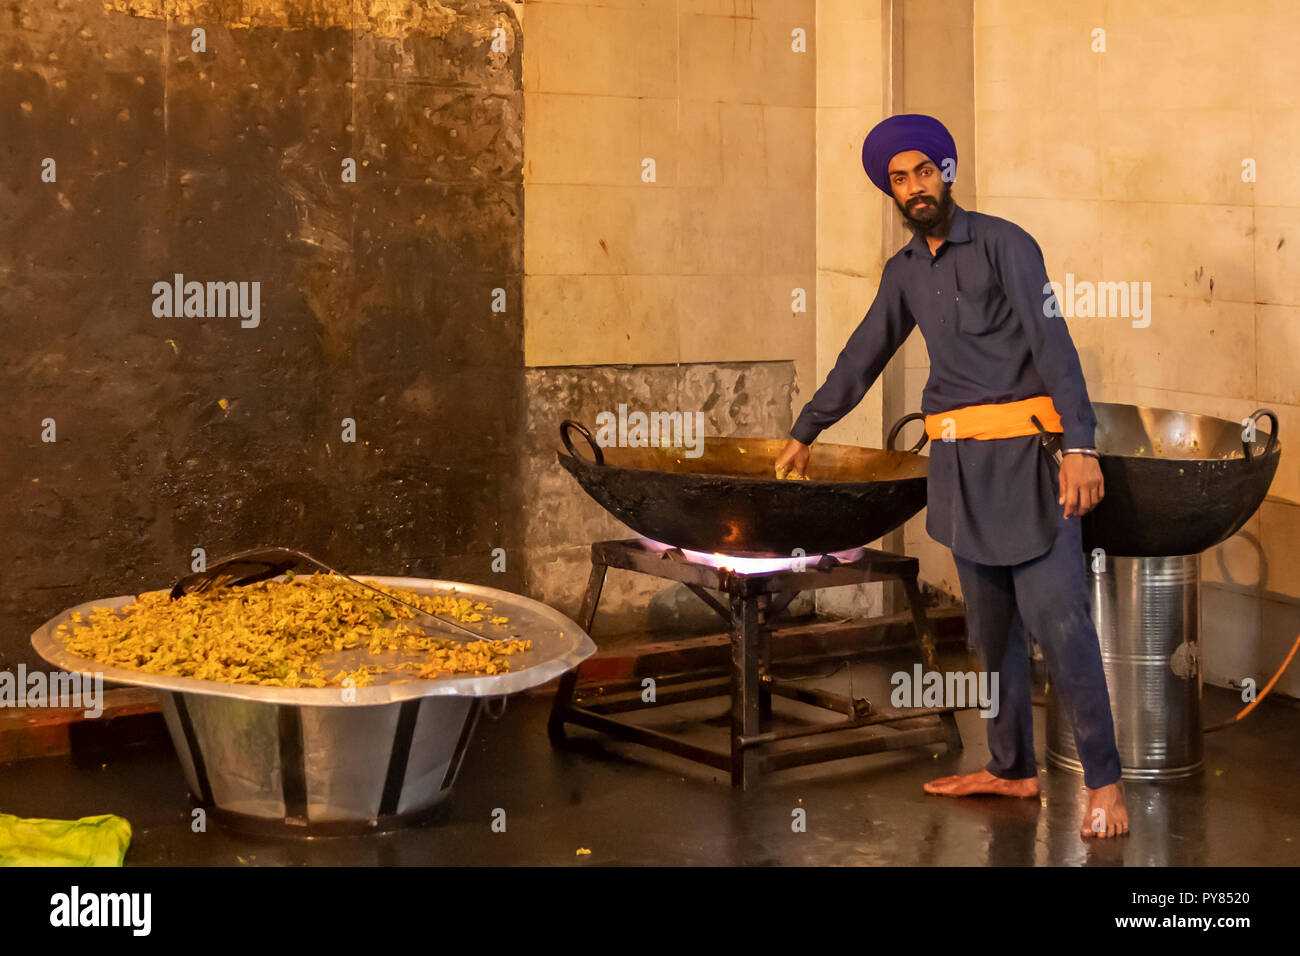 Cooking Food at Langar Hall Community Kitchen,. Amritsar, Punjab, India Stock Photo